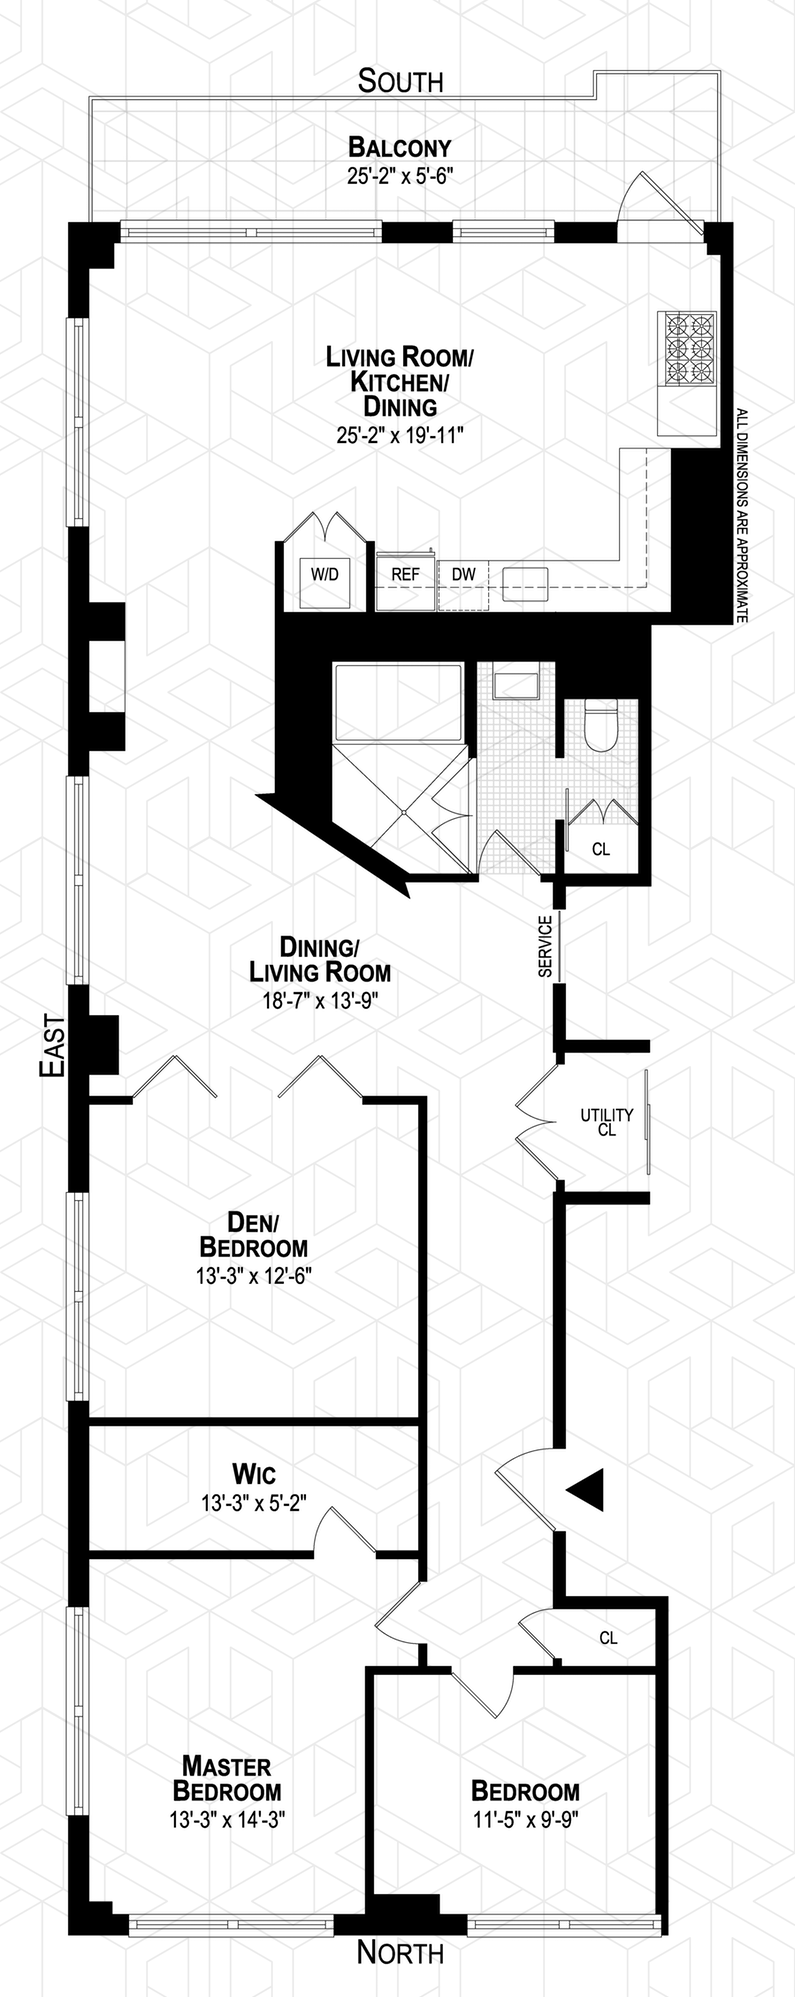 Floorplan for 50 West 29th Street, 12E